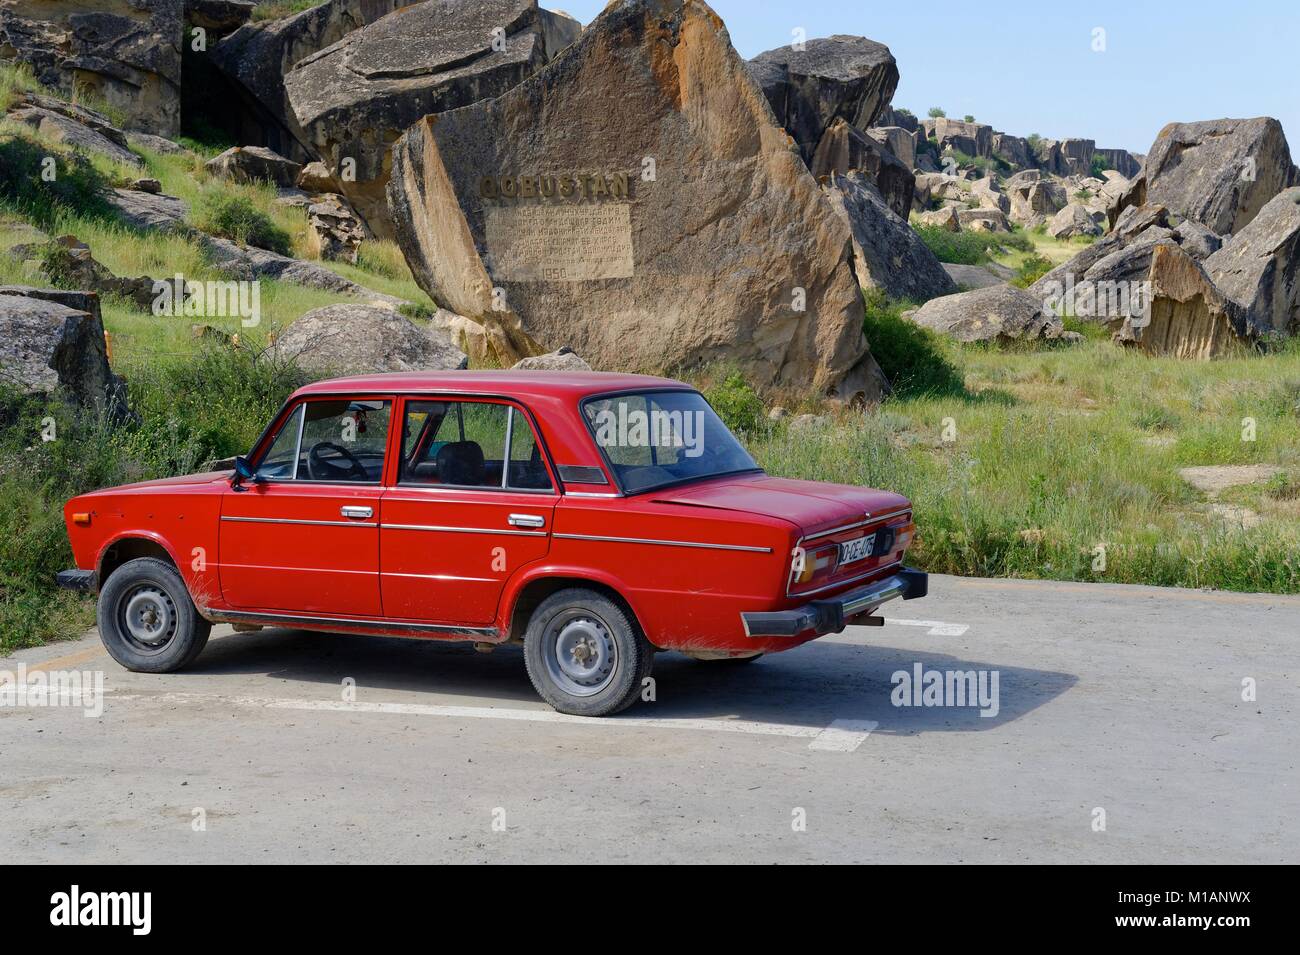 A Lada car at the Gobustan National Park, Azerbaijan, UNESCO world heritage site Stock Photo